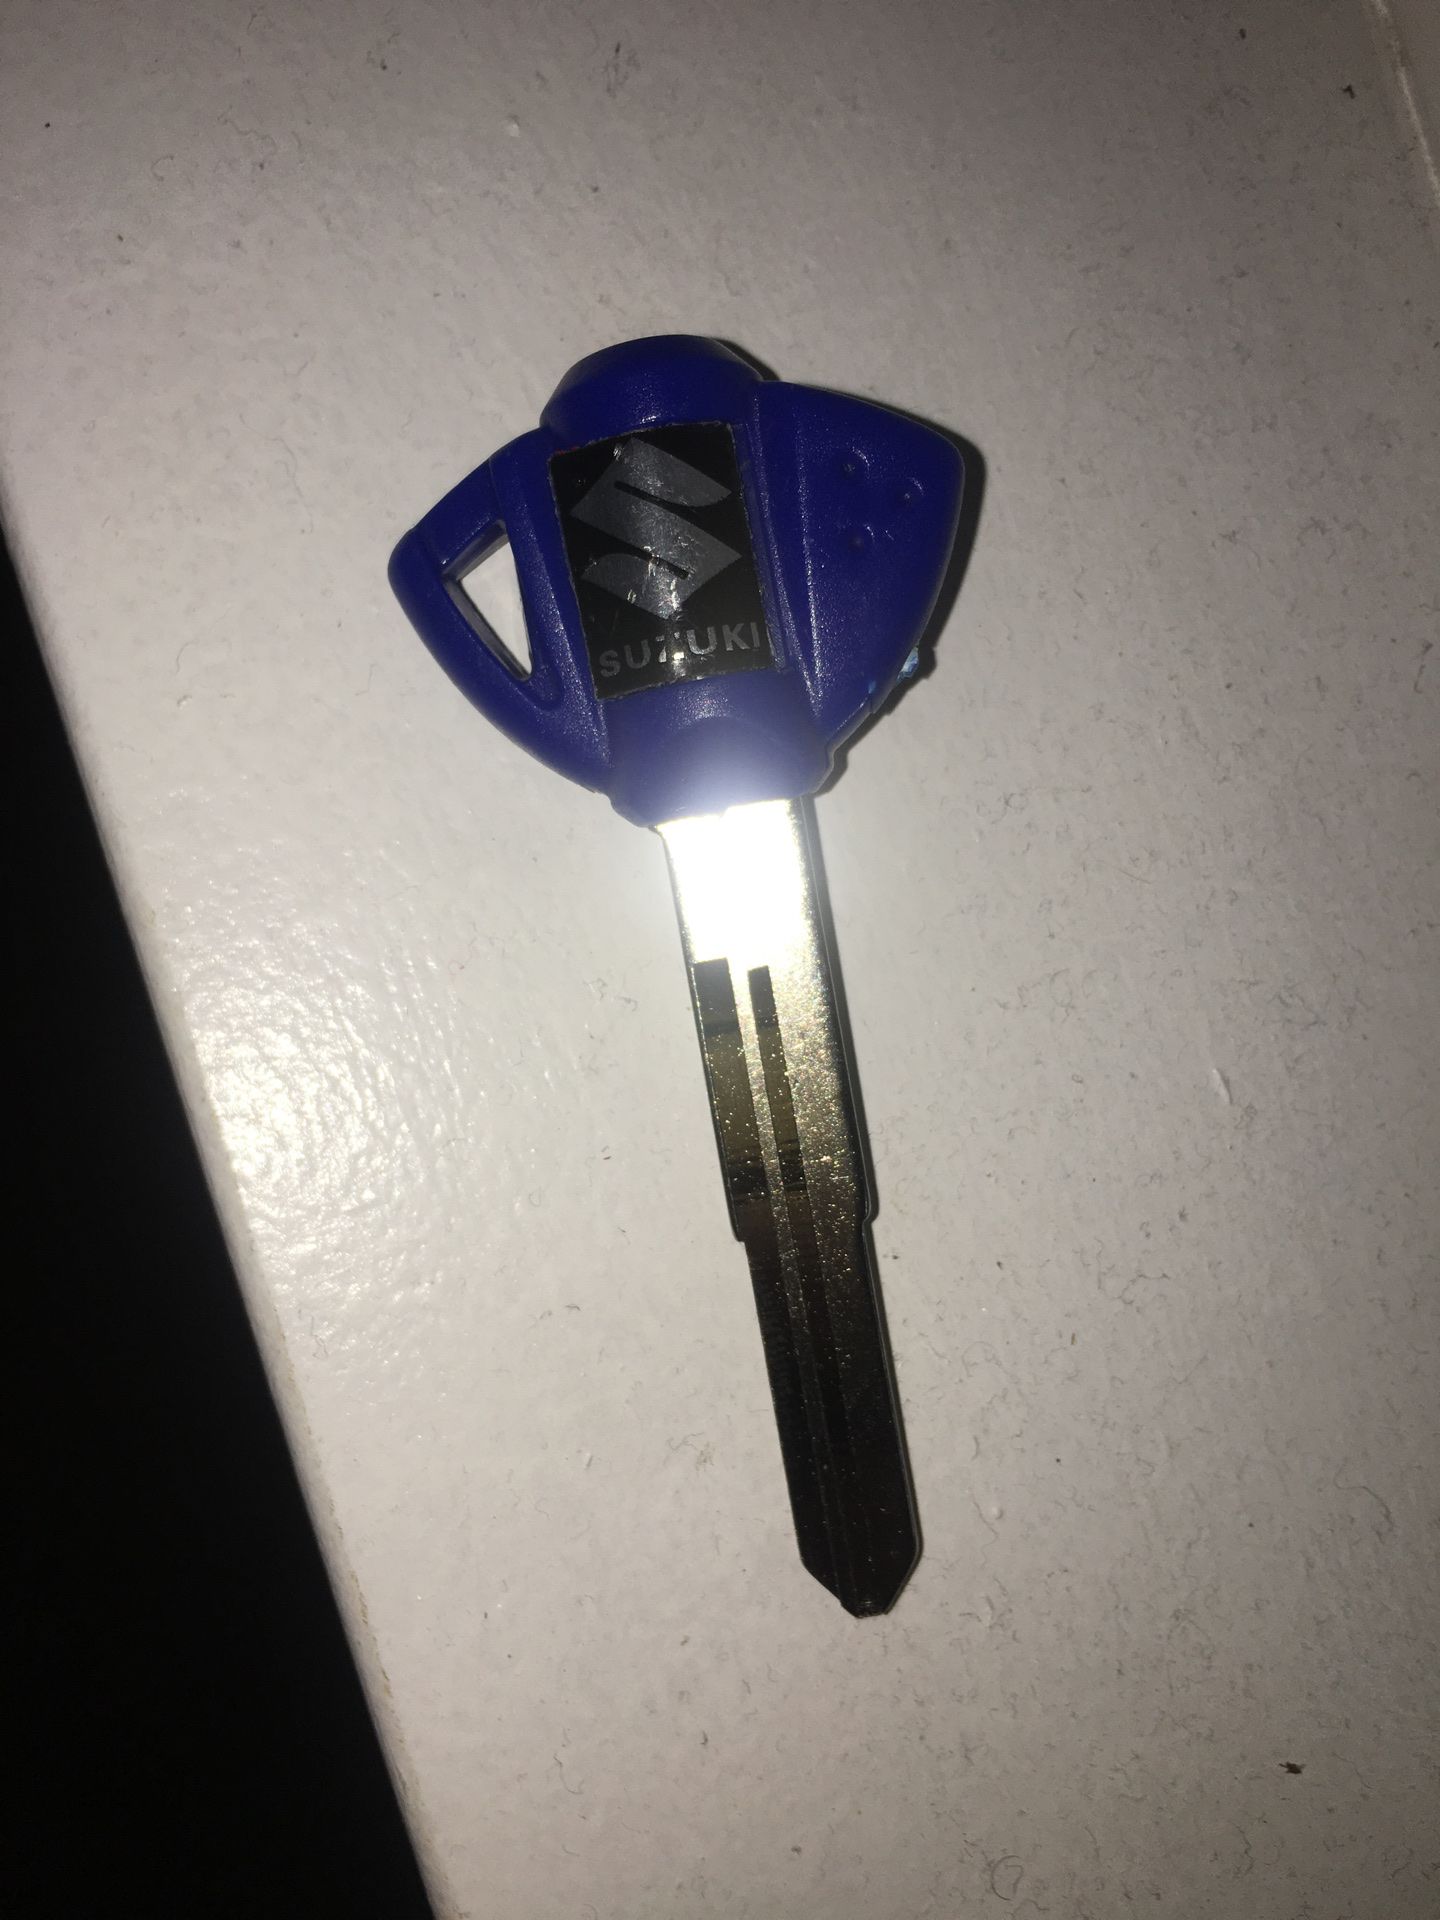 Suzuki motorcycle key never used